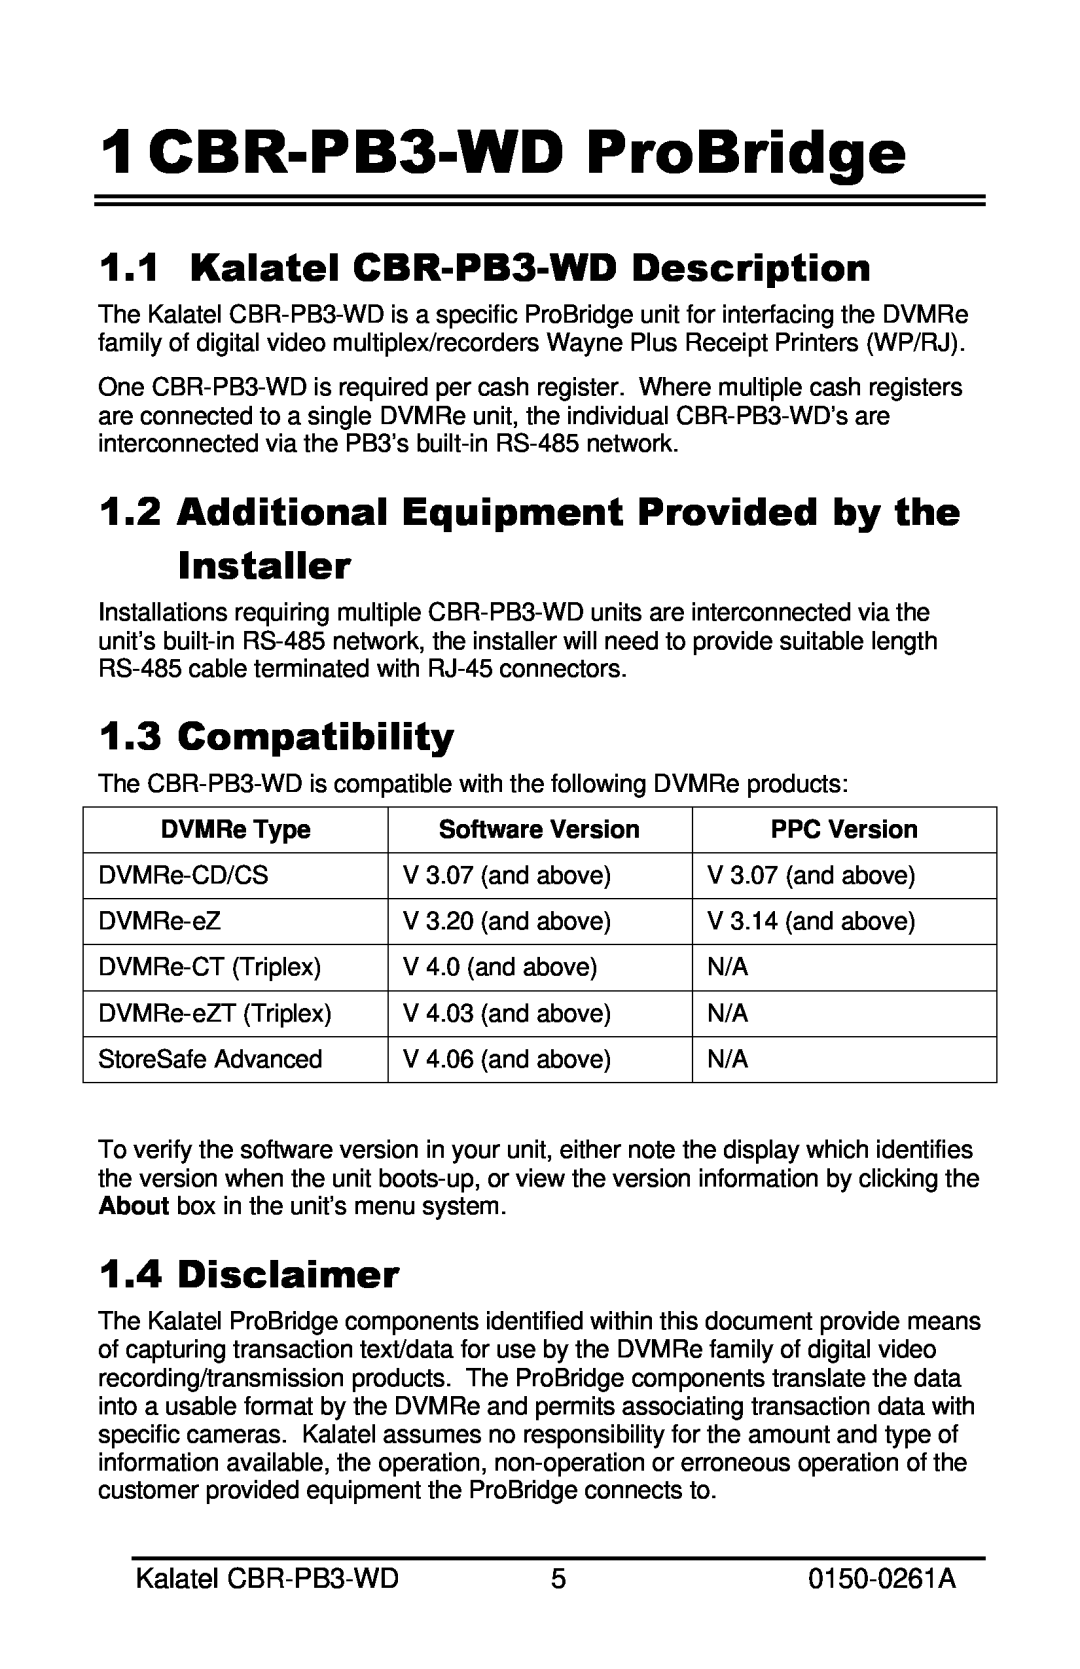 GE CBR-PB3-WD ProBridge, Kalatel CBR-PB3-WD Description, Additional Equipment Provided by the Installer, Compatibility 